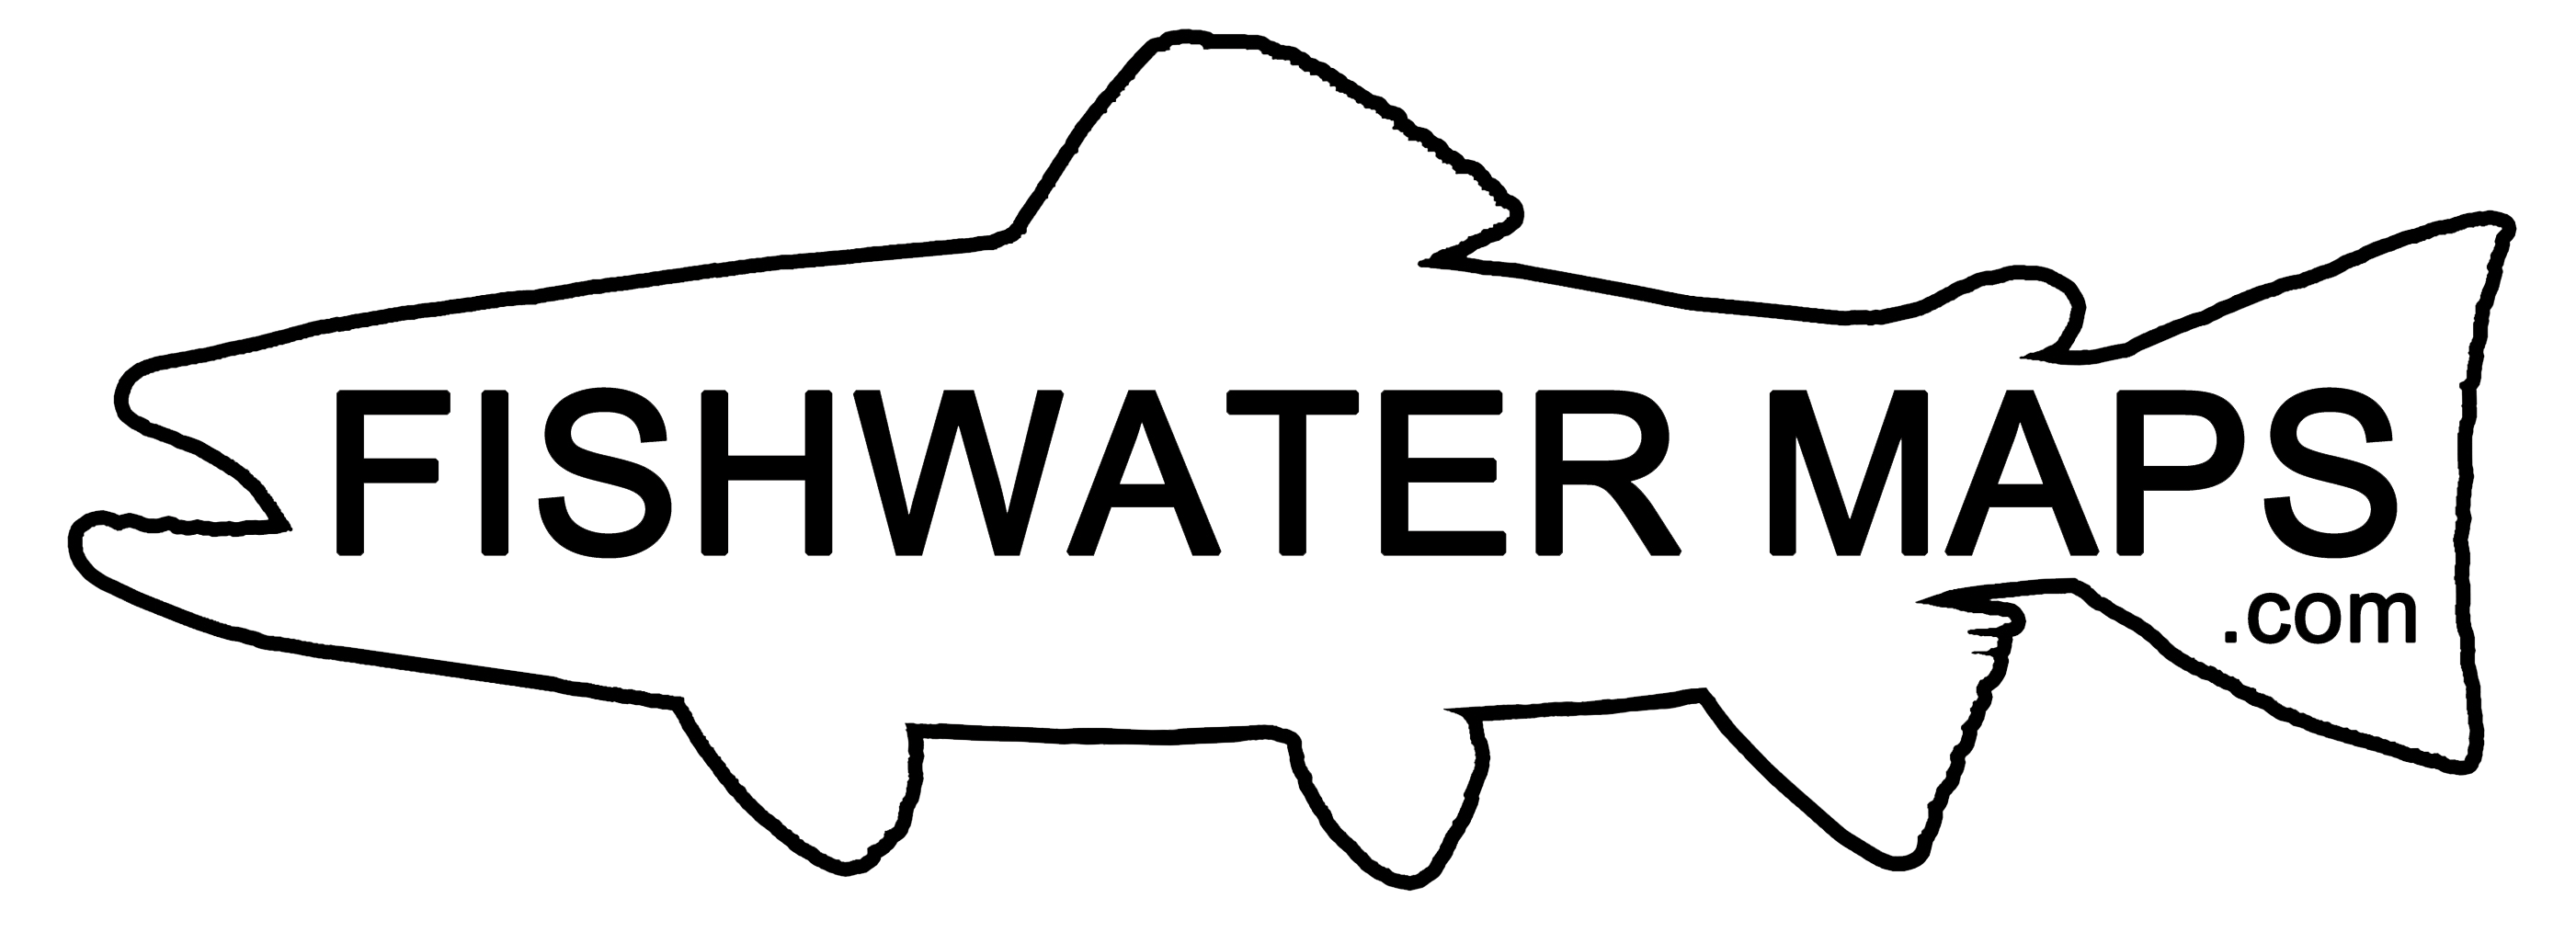 FishwaterMaps.com